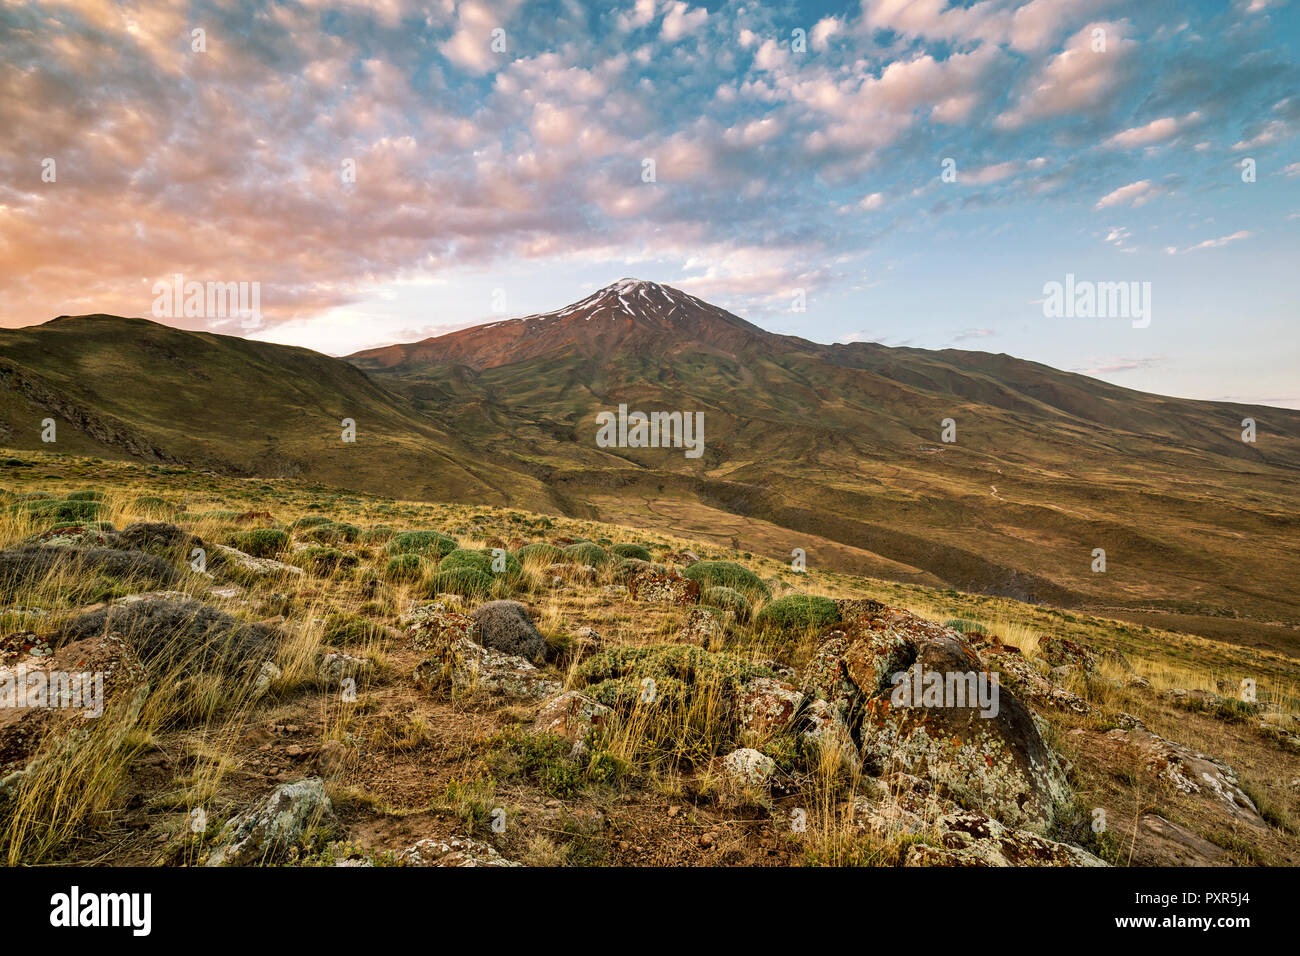 Iran, Mazandaran Province, Amol, Damavand Mountain Stock Photo